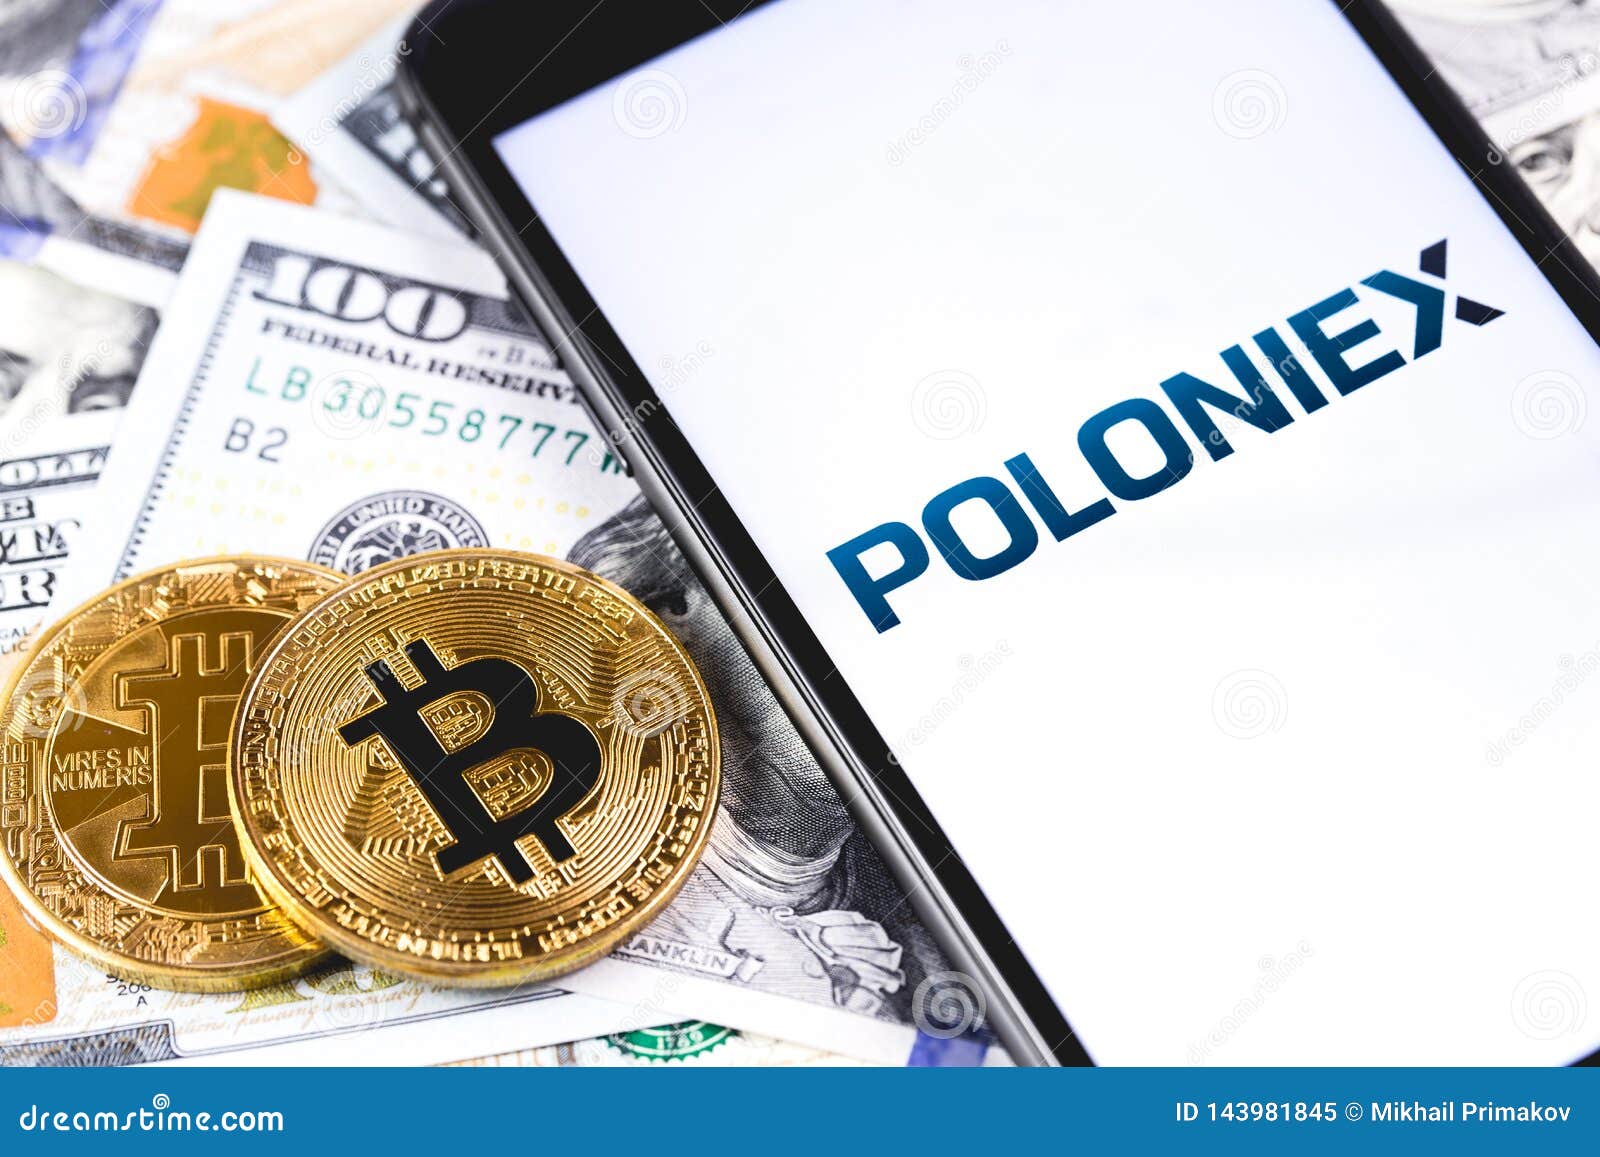 bitcoin exchange poloniex